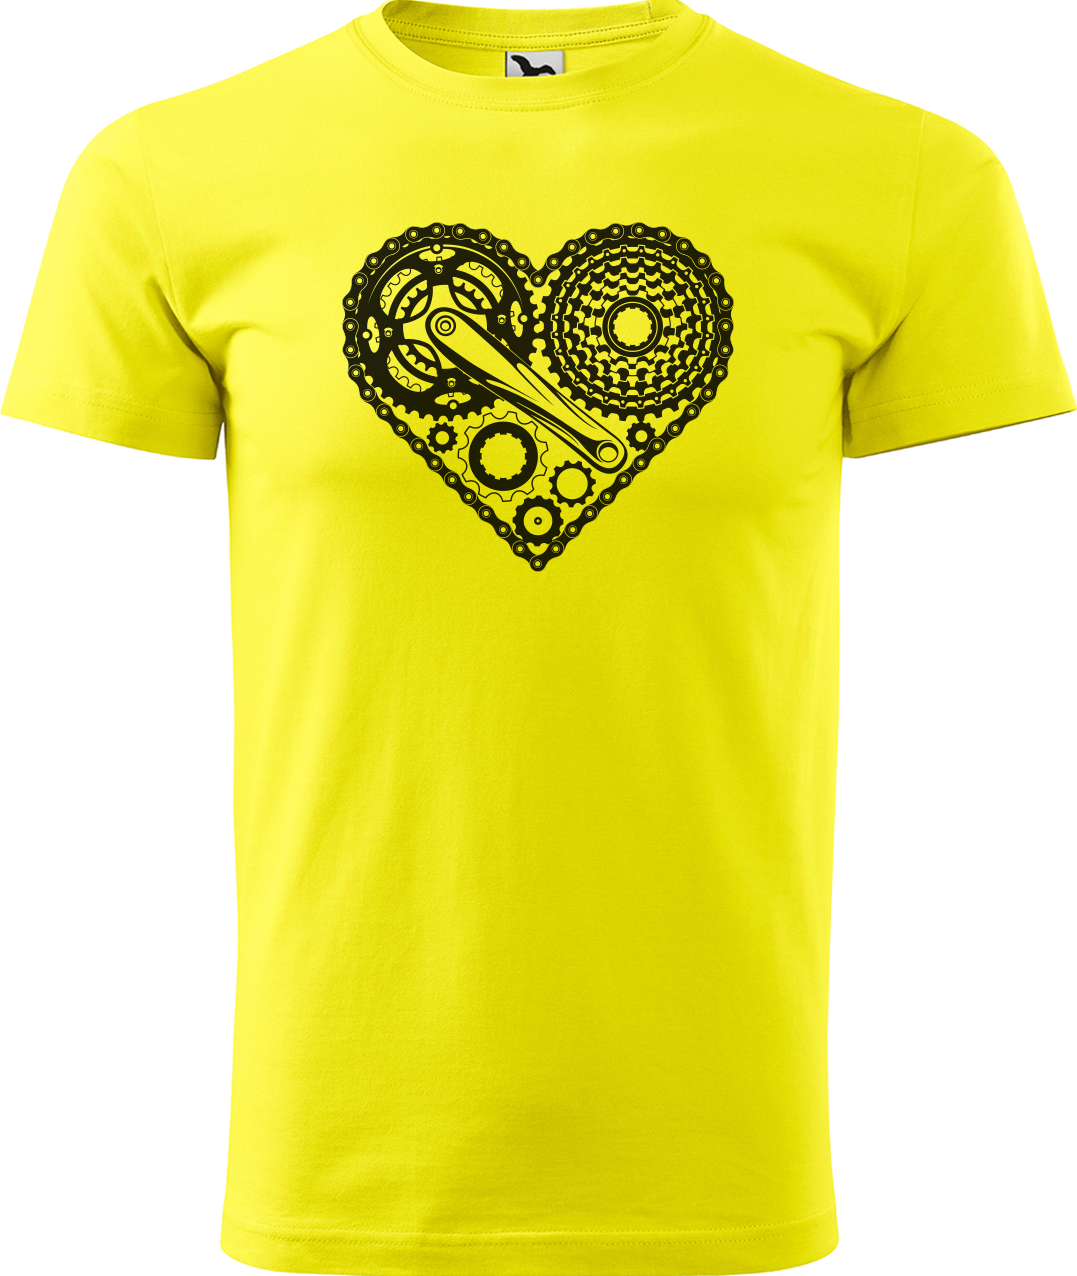 Pánské tričko pro cyklistu - Cyklosrdce Velikost: S, Barva: Žlutá (04)